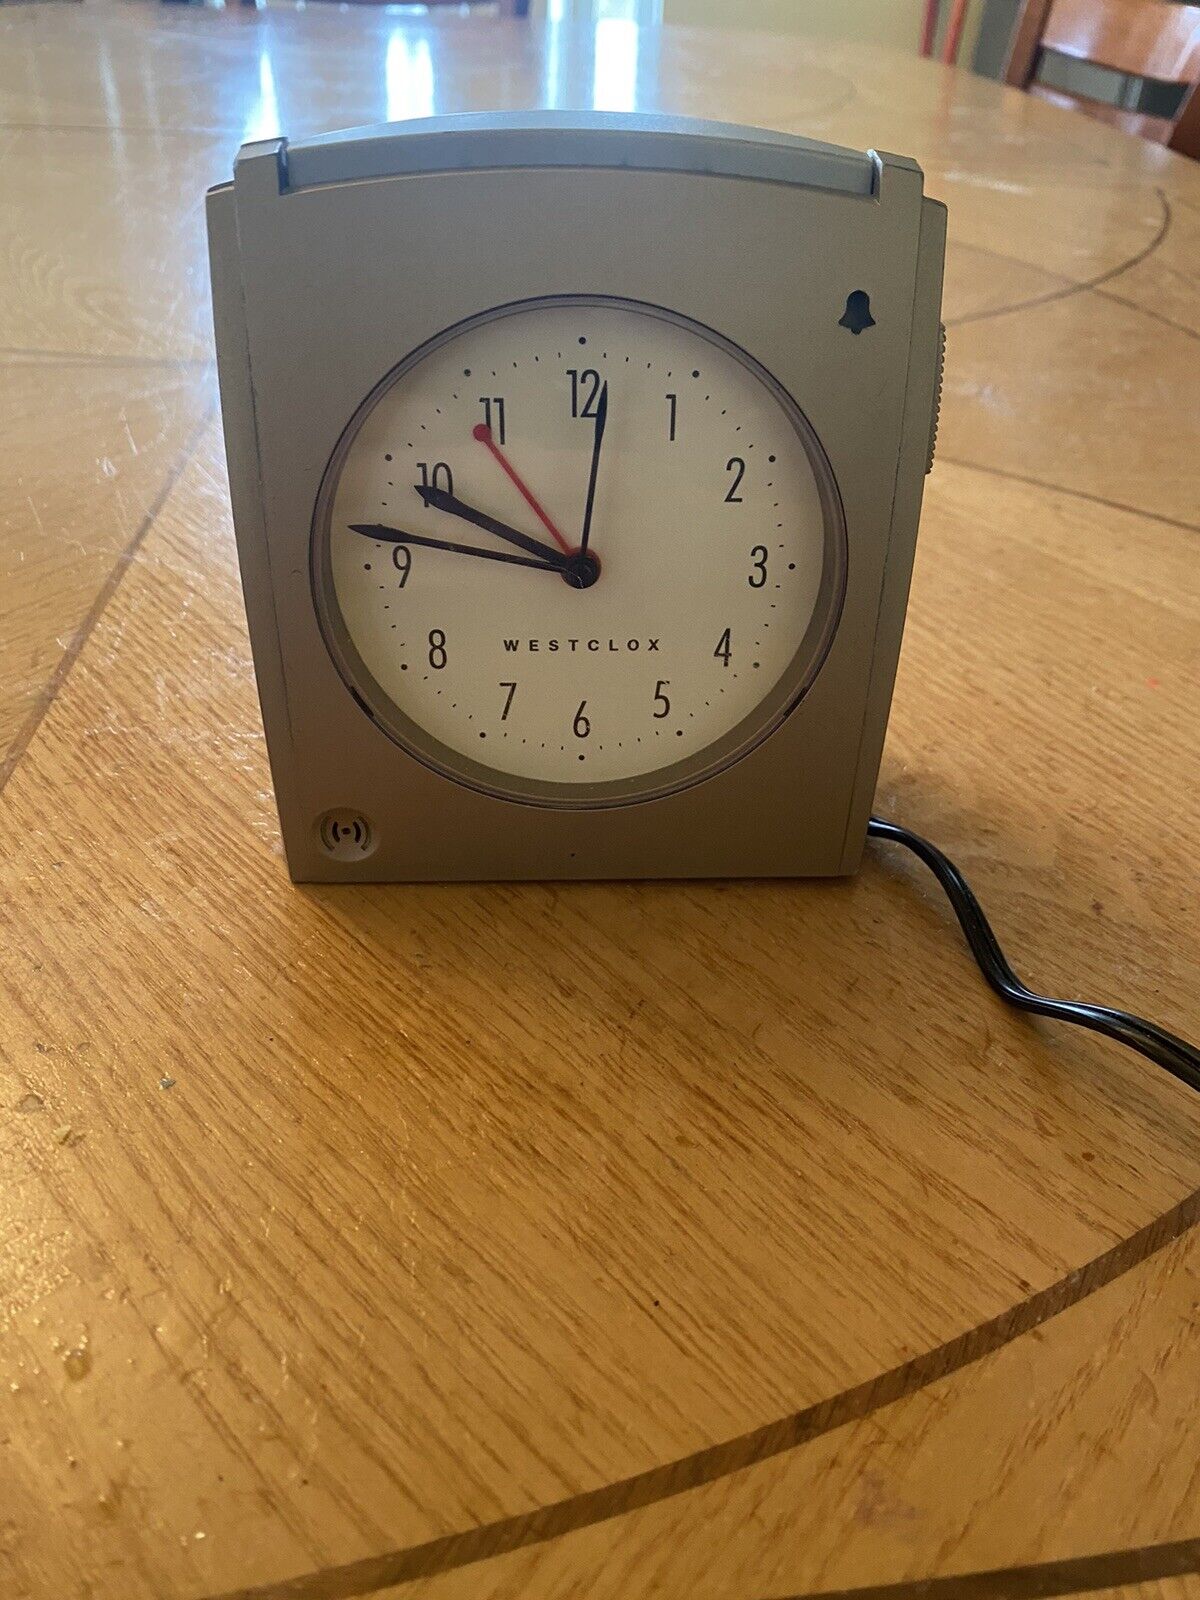 Westclox Electronic Alarm Clock (Model 43506)